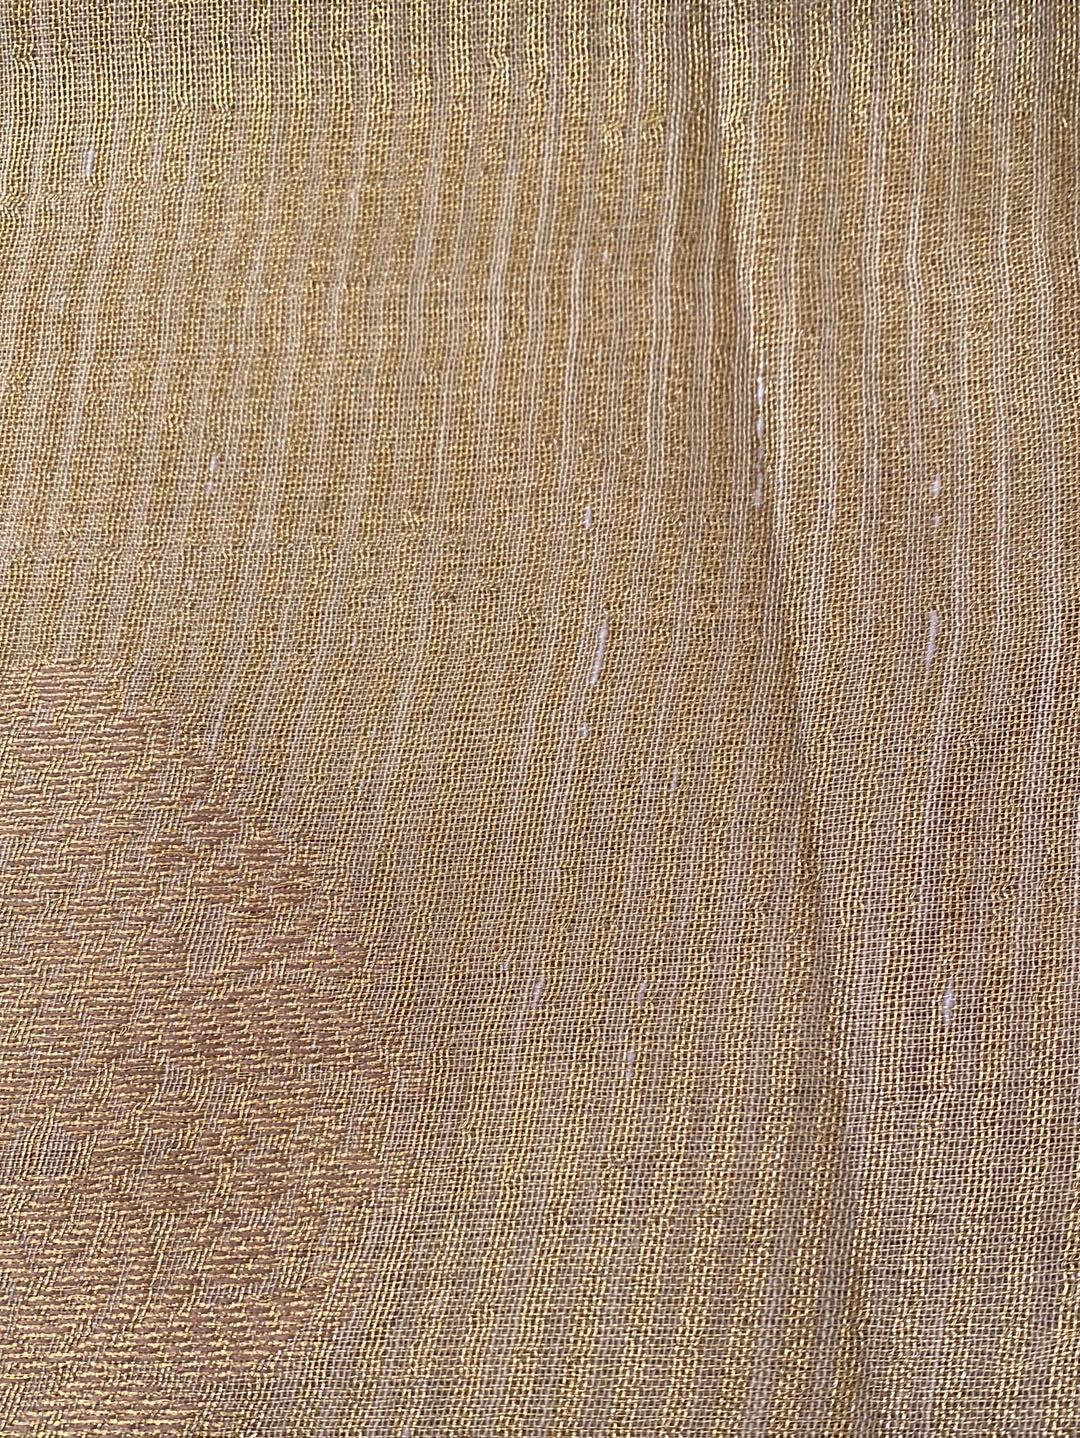 Golden Tissue Monotone